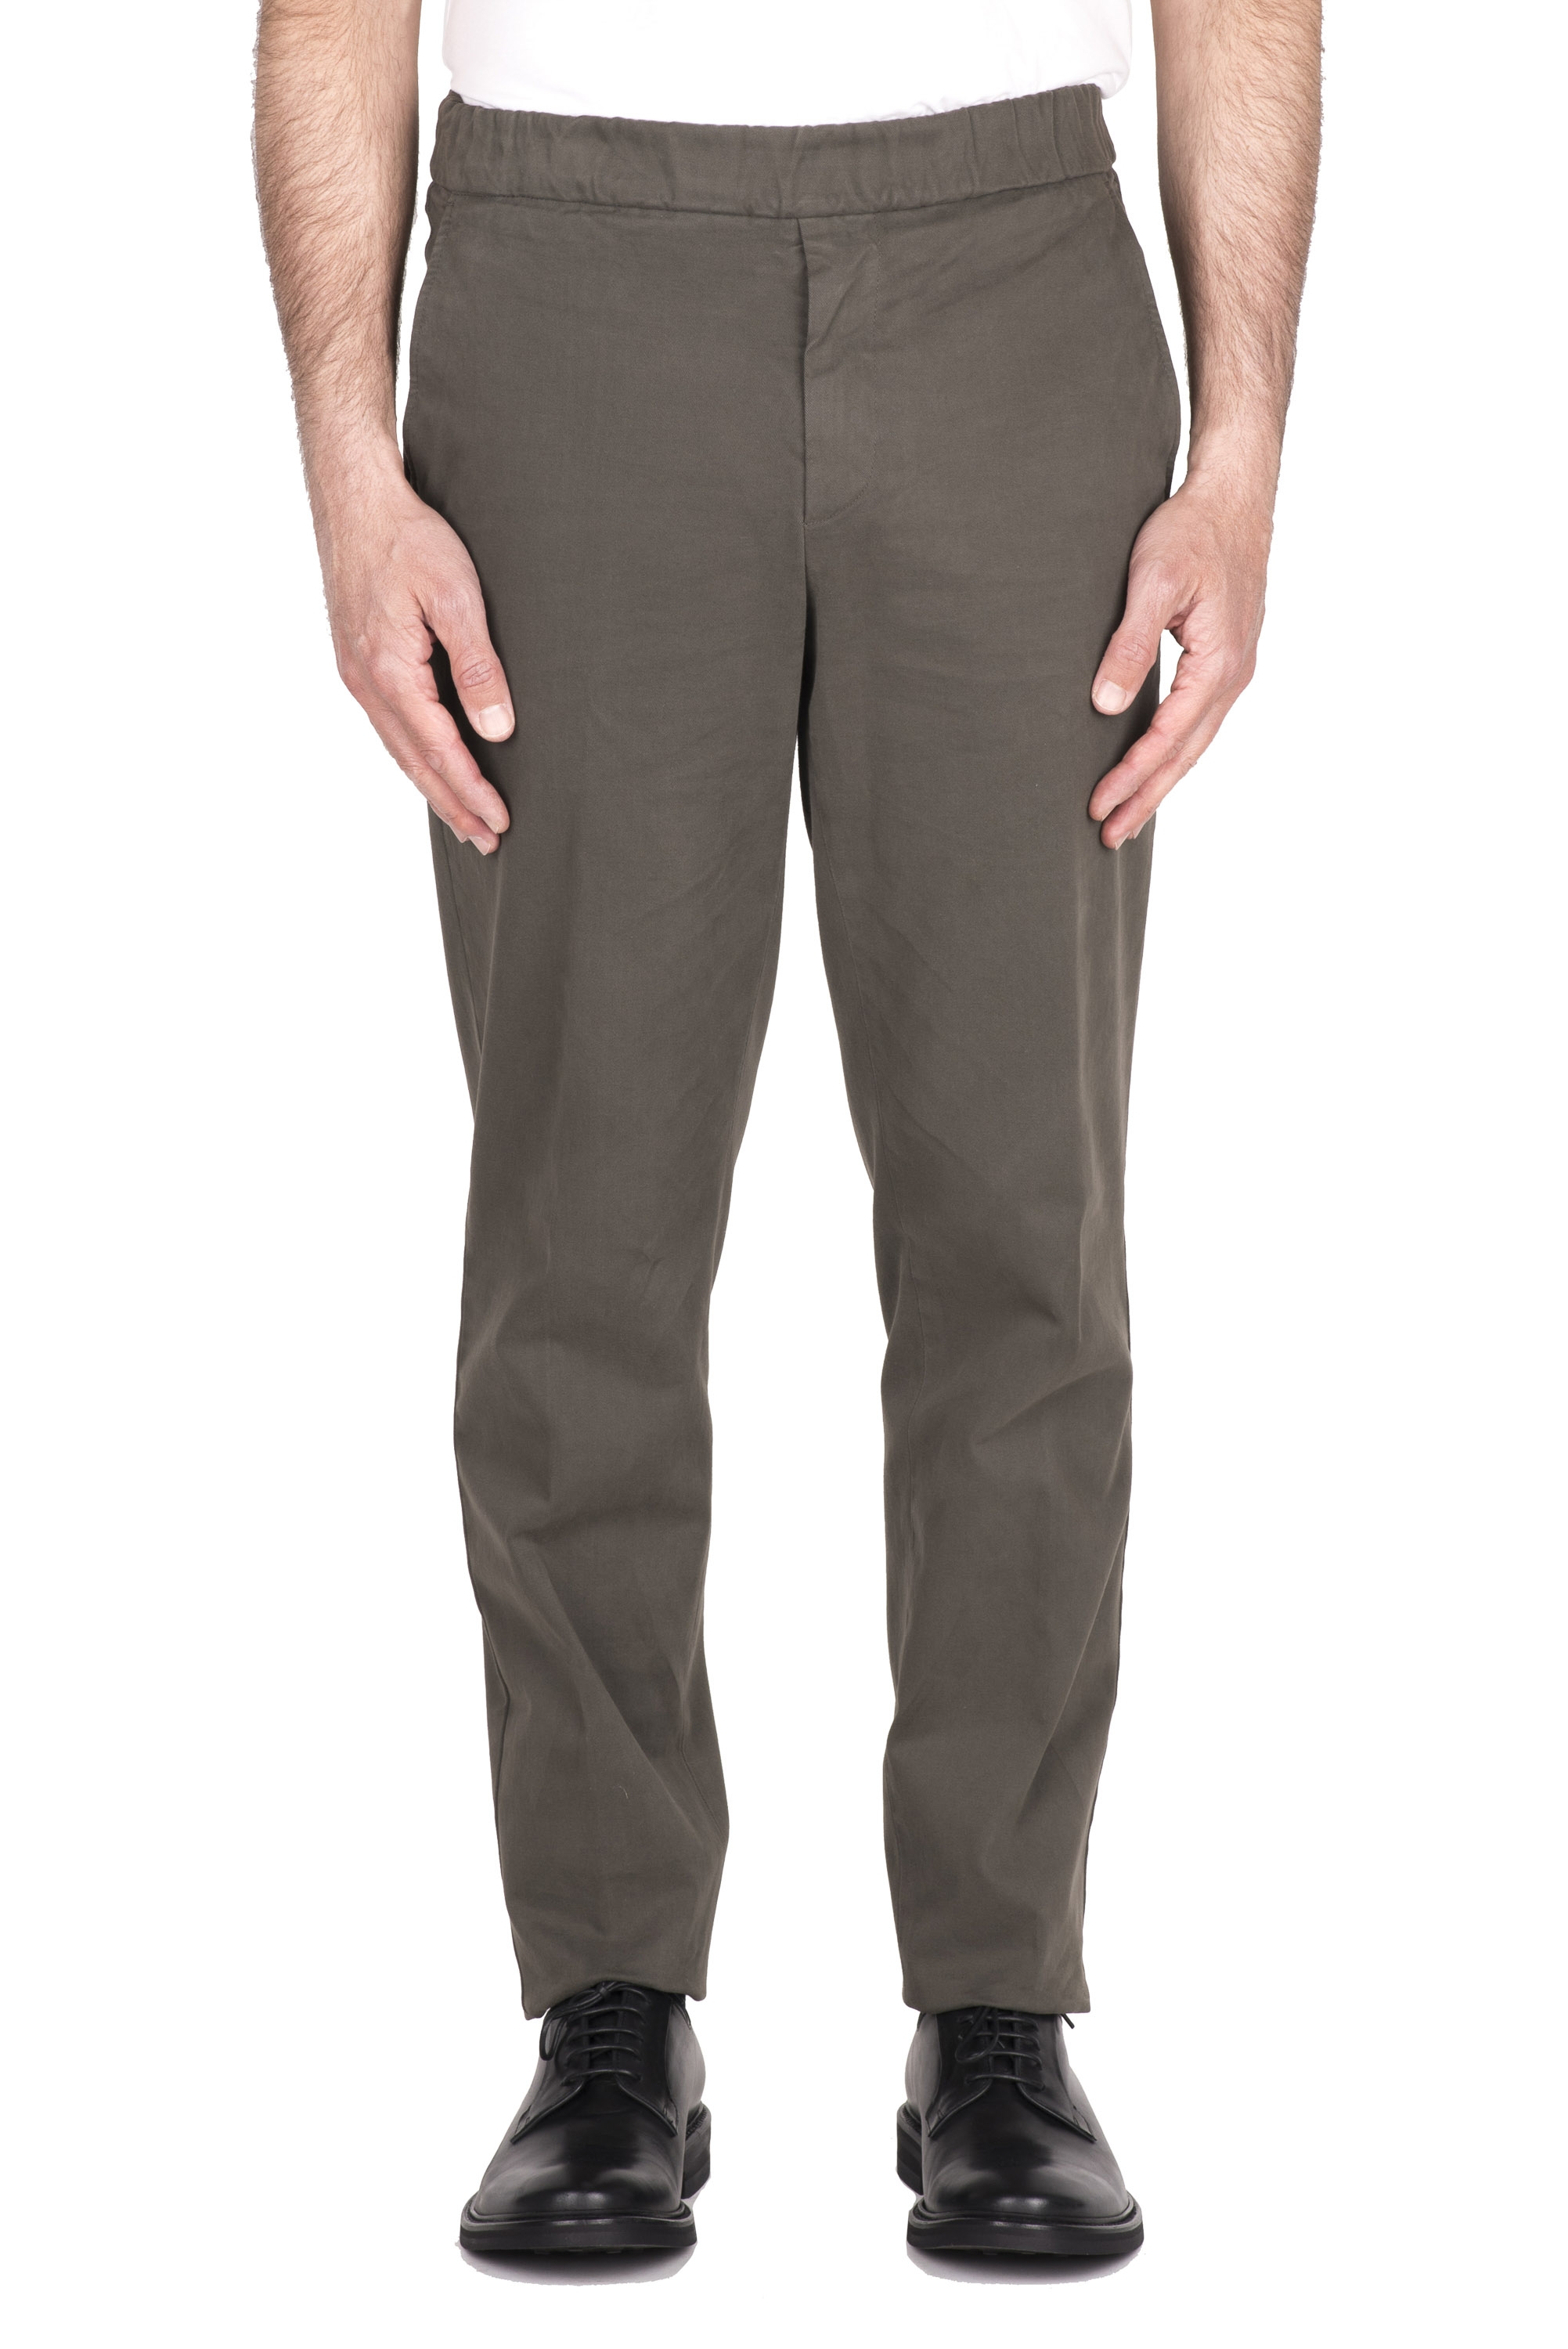 SBU 04622_23AW Pantalón confort de algodón elástico marrón 01